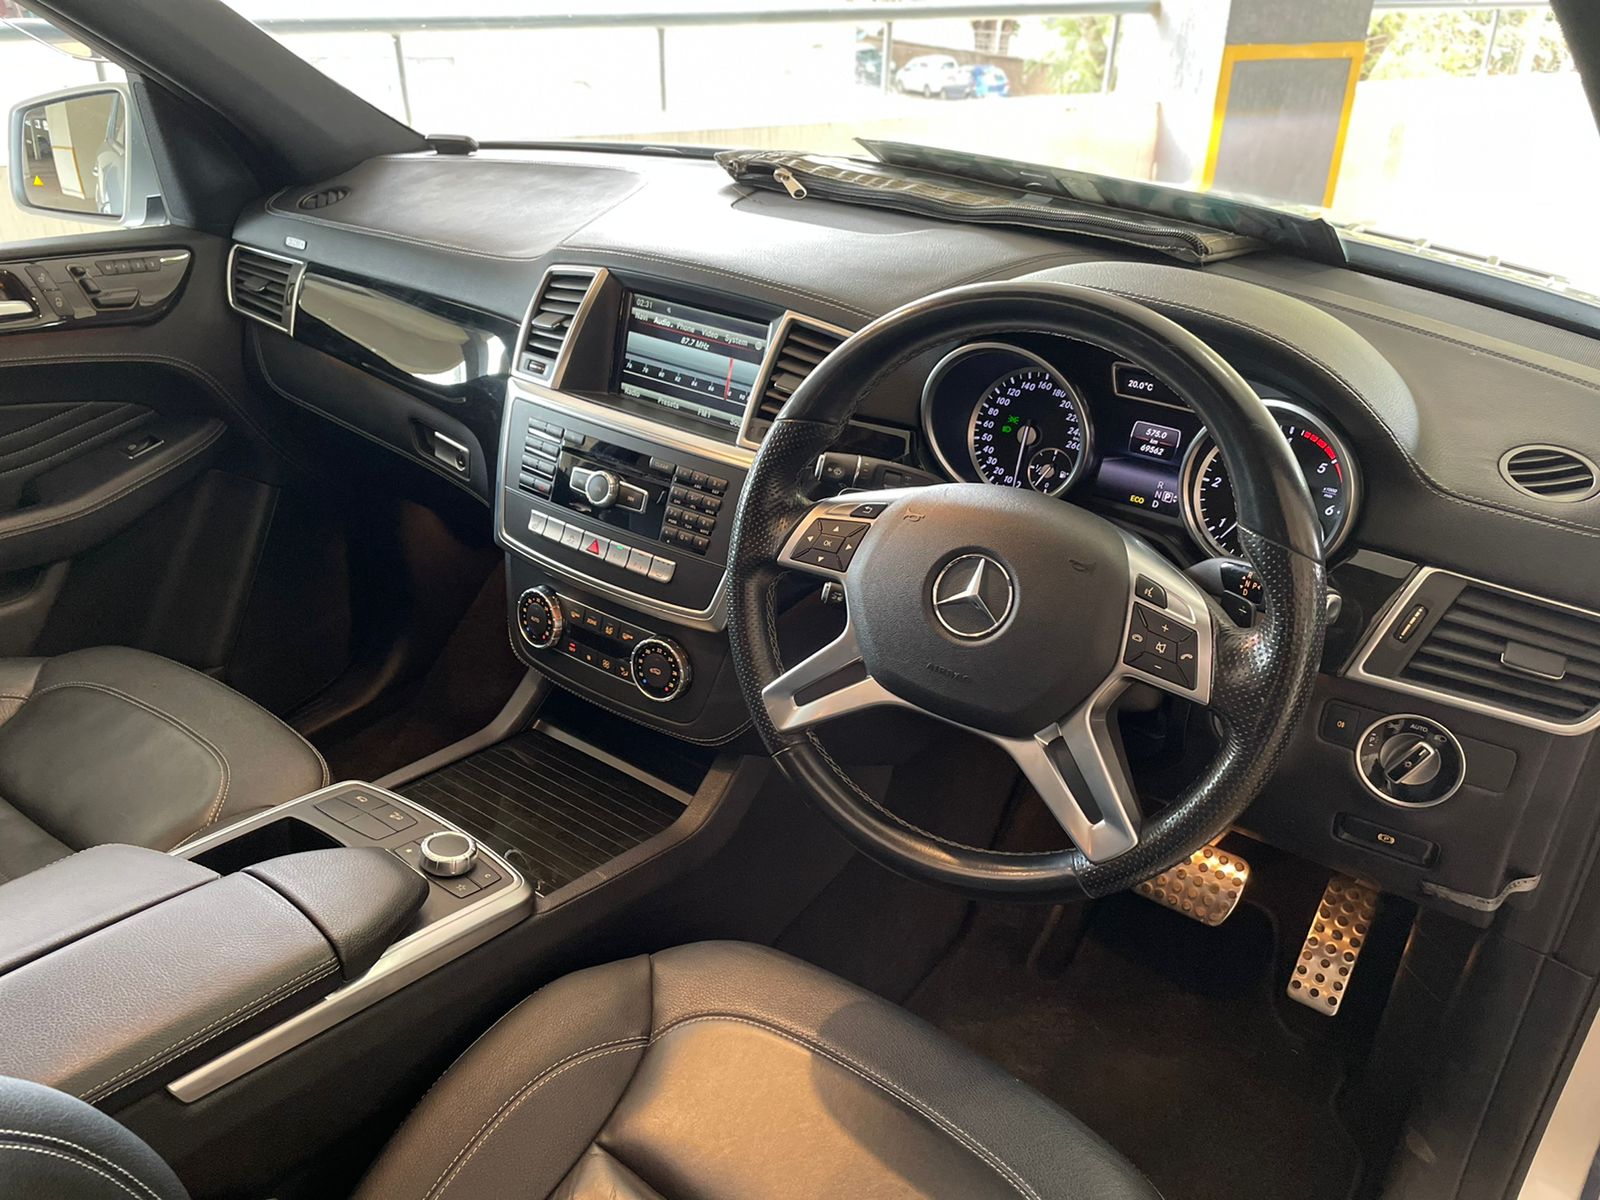 Mercedes Benz ML350 2015 sunroof Trade in OK New